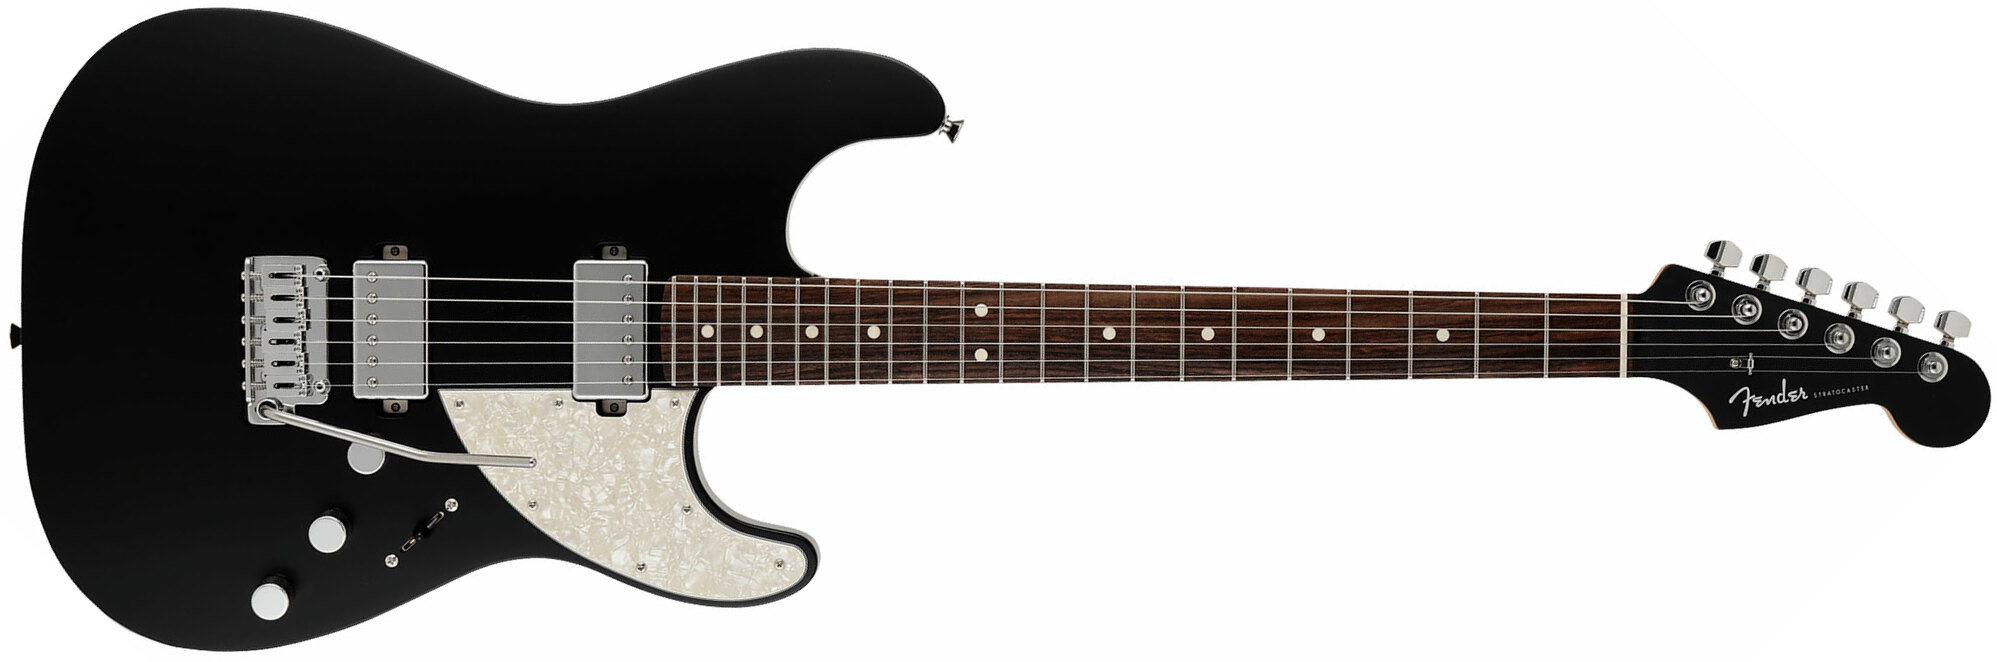 Fender Strat Elemental Mij Jap 2h Trem Rw - Stone Black - Str shape electric guitar - Main picture